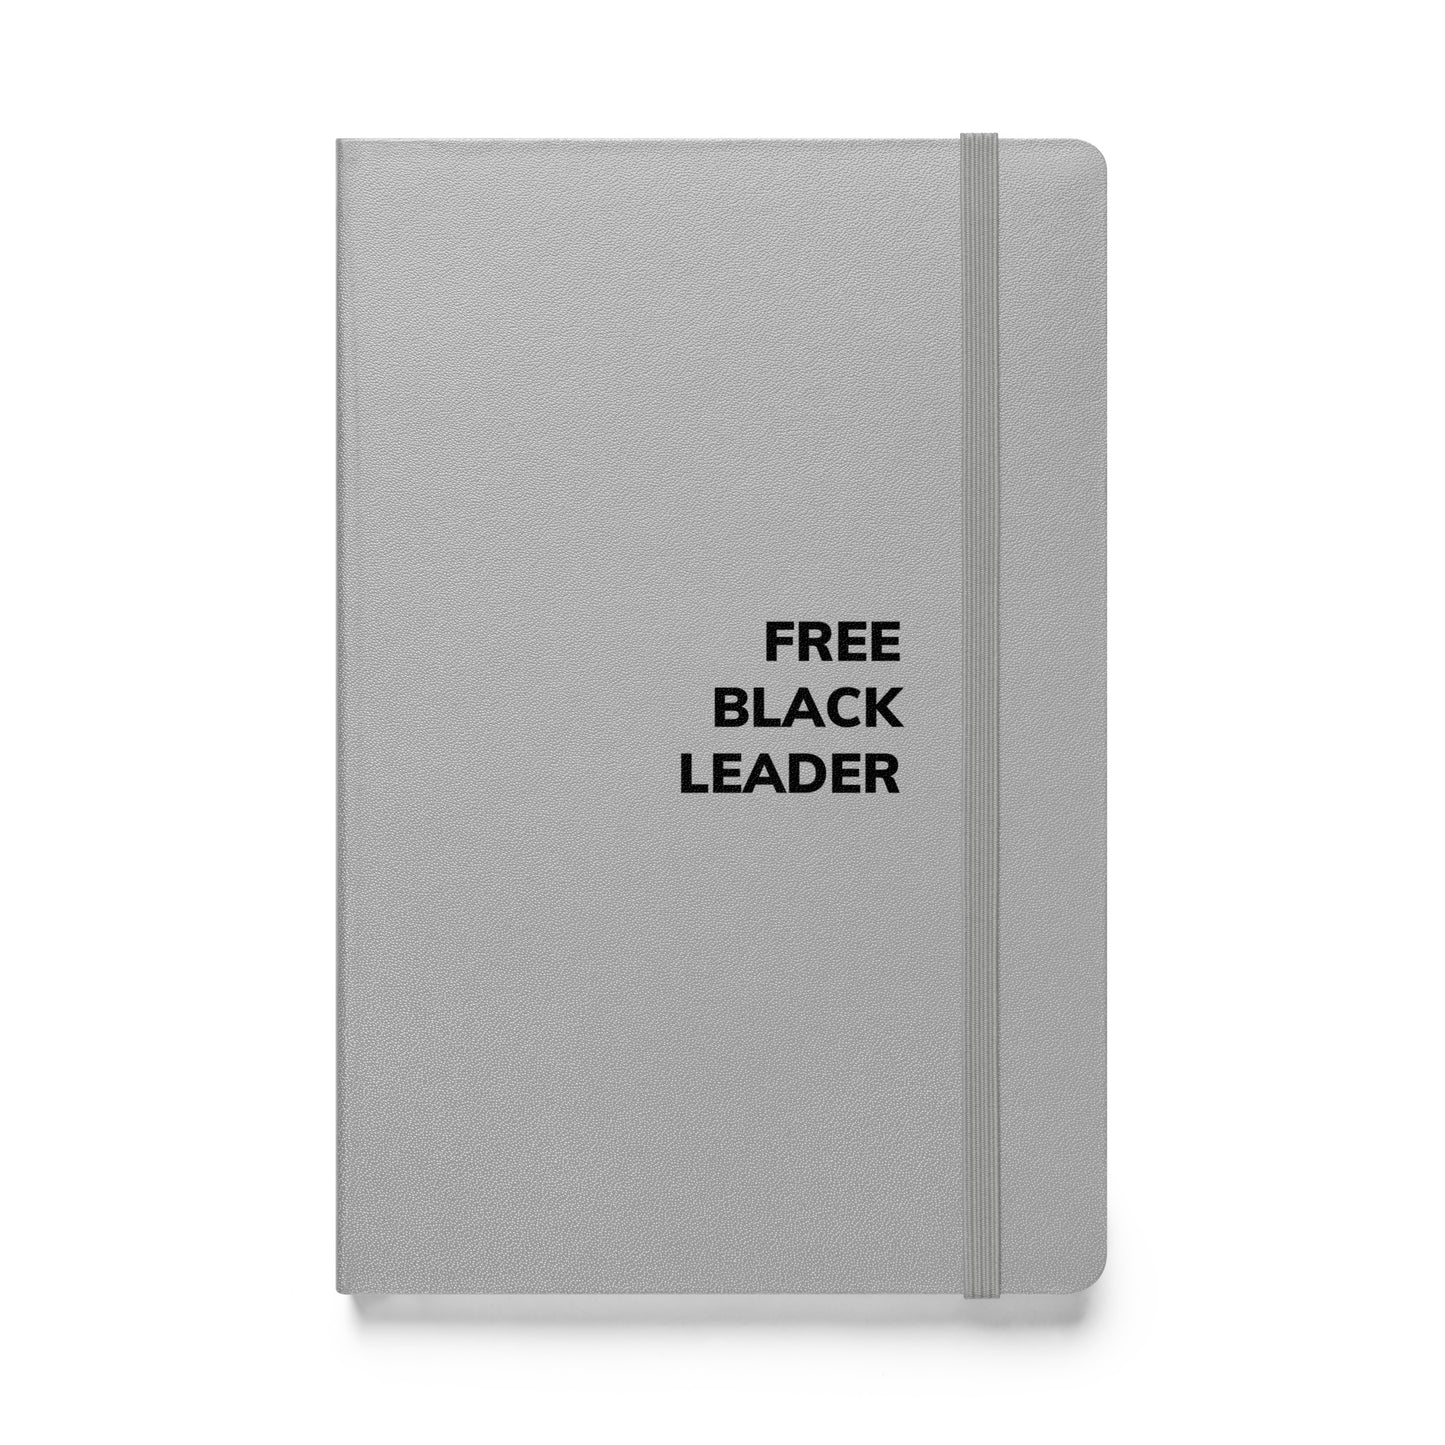 Free Black Leader Hardcover bound notebook